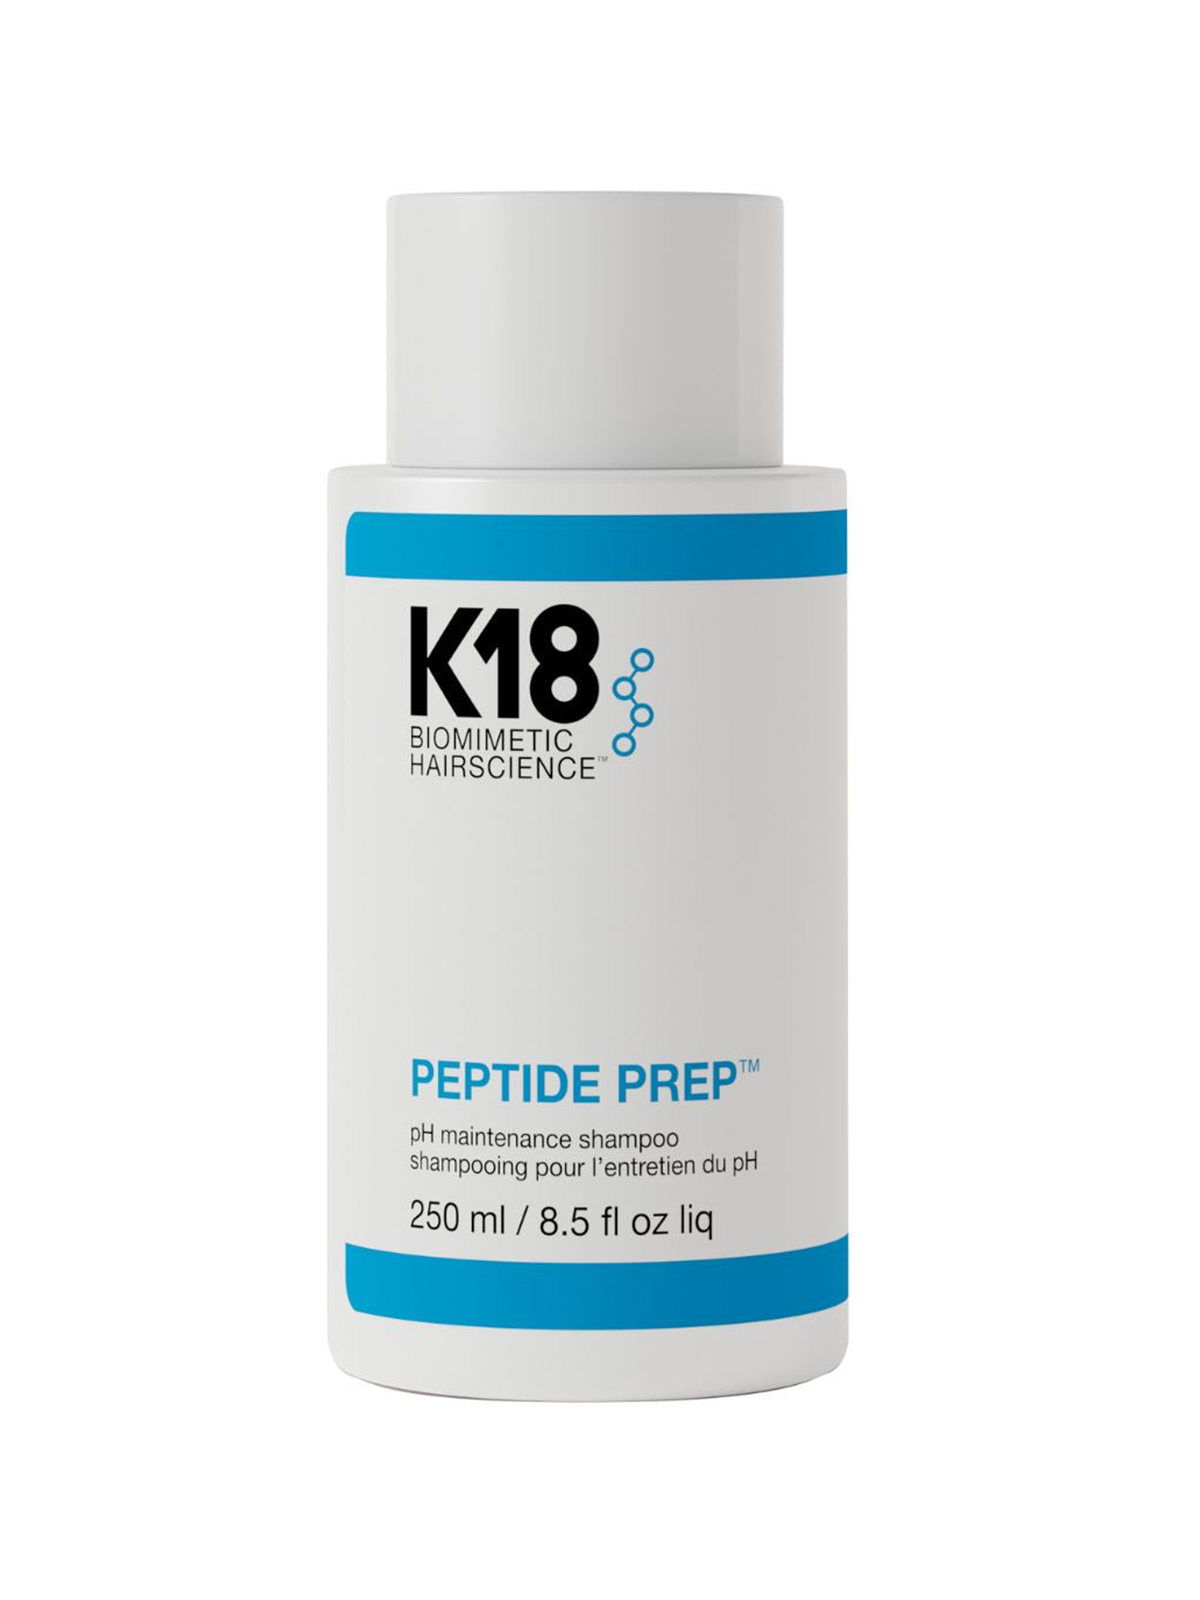 K18 PH Maintenance Shampoo Peptide Prep (250 ml)